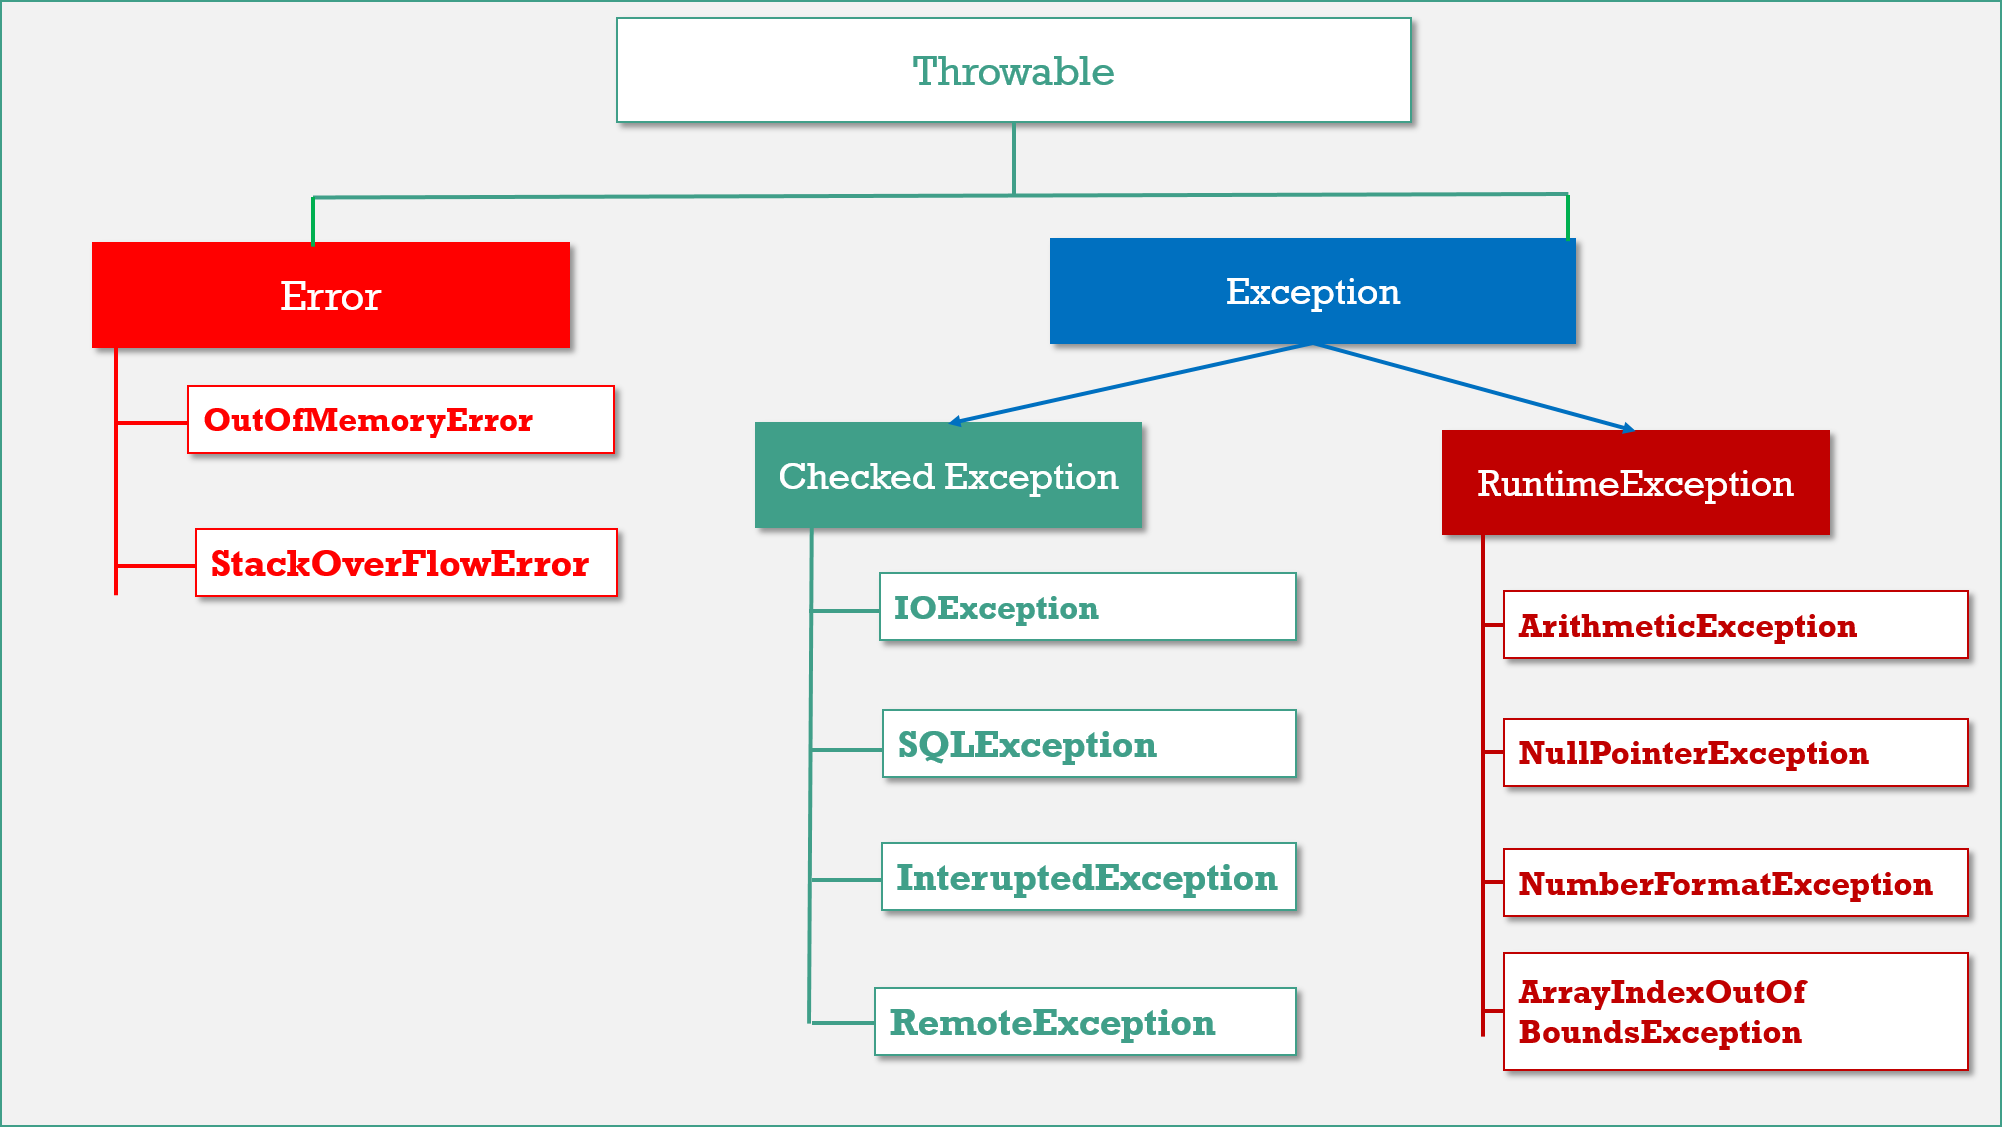 Securityexception java. Структура исключений java. Опишите иерархию исключений в java. Иерархия классов исключений в java. Таблица исключений java.